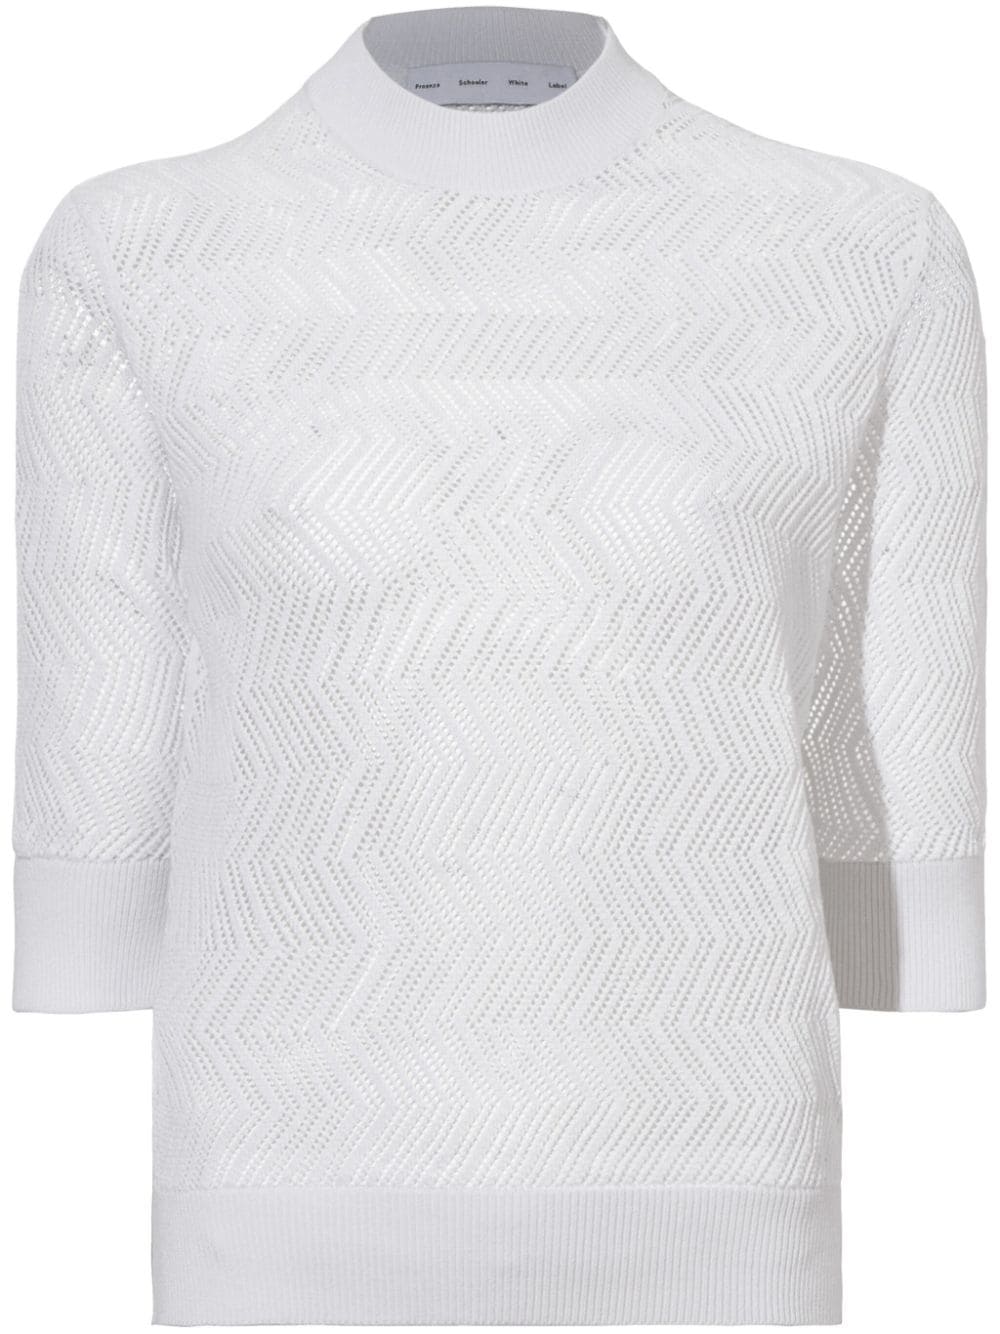 Proenza Schouler White Label Nicola pointelle-knit cotton top Wit